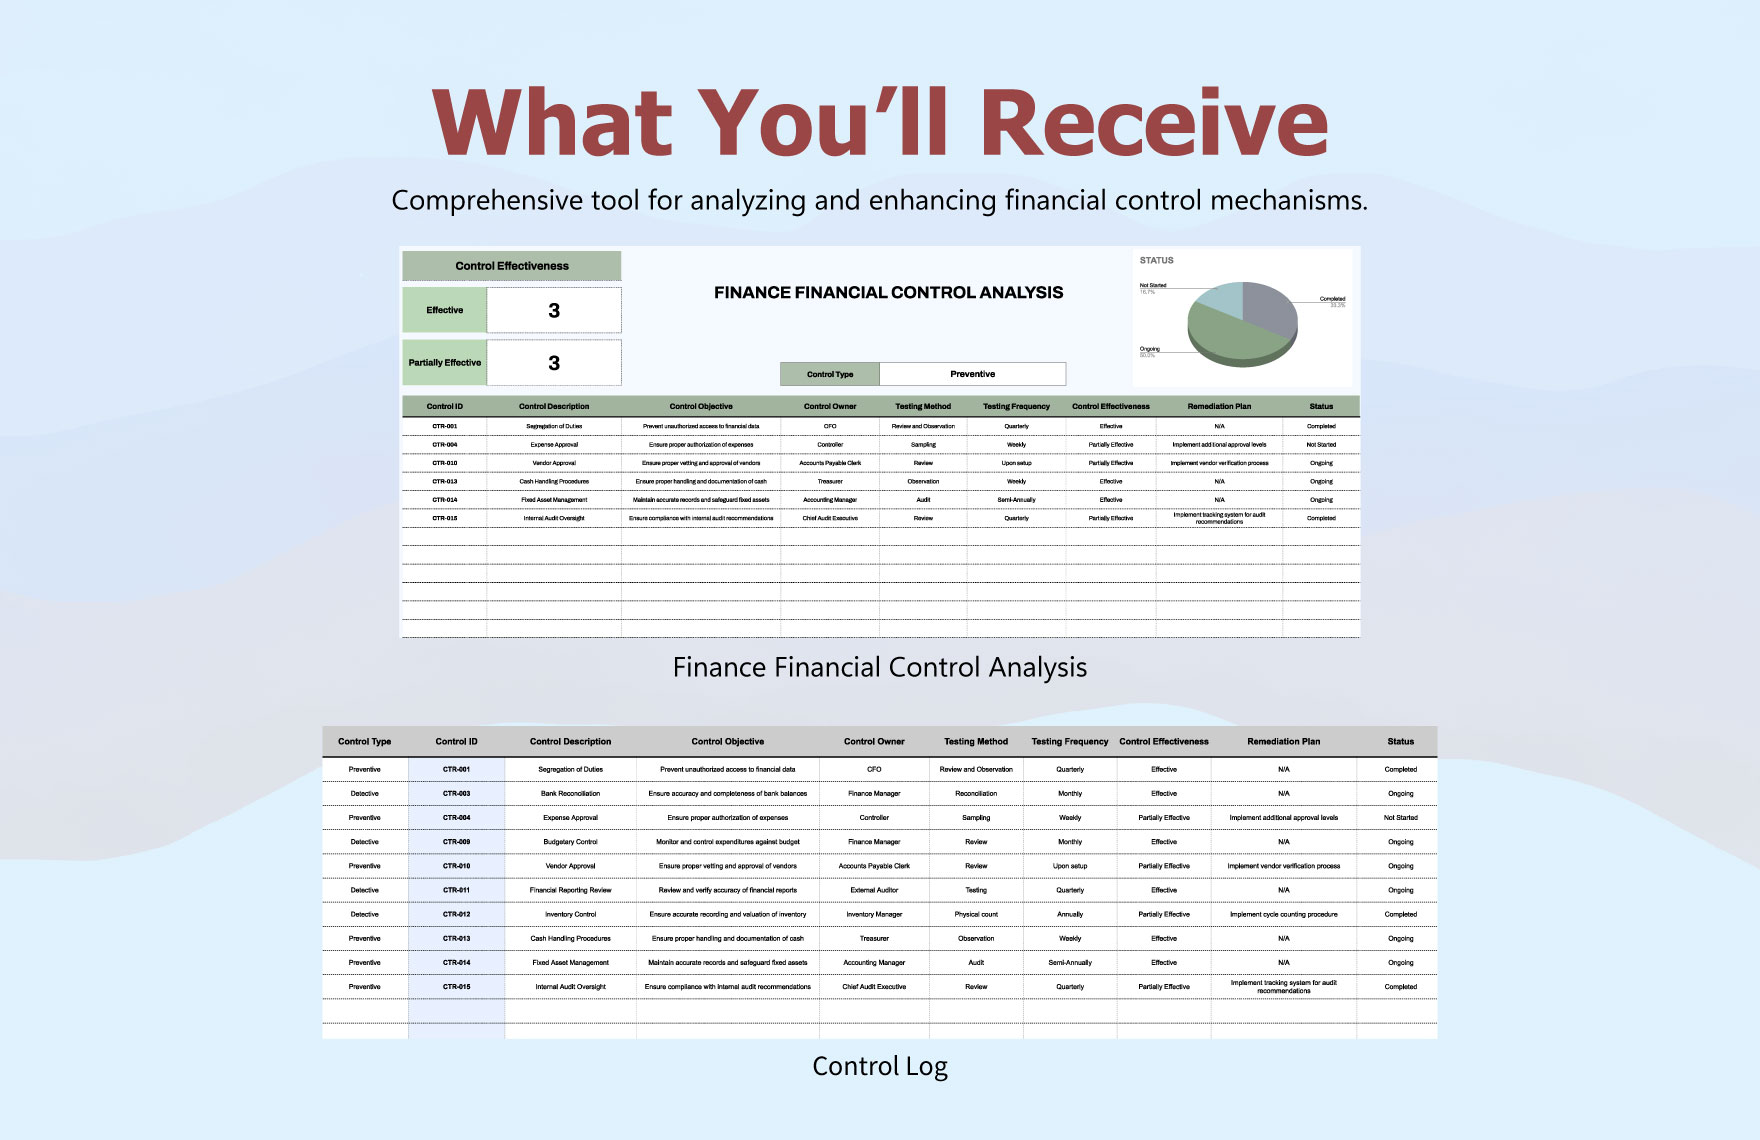 Finance Financial Control Analysis Template